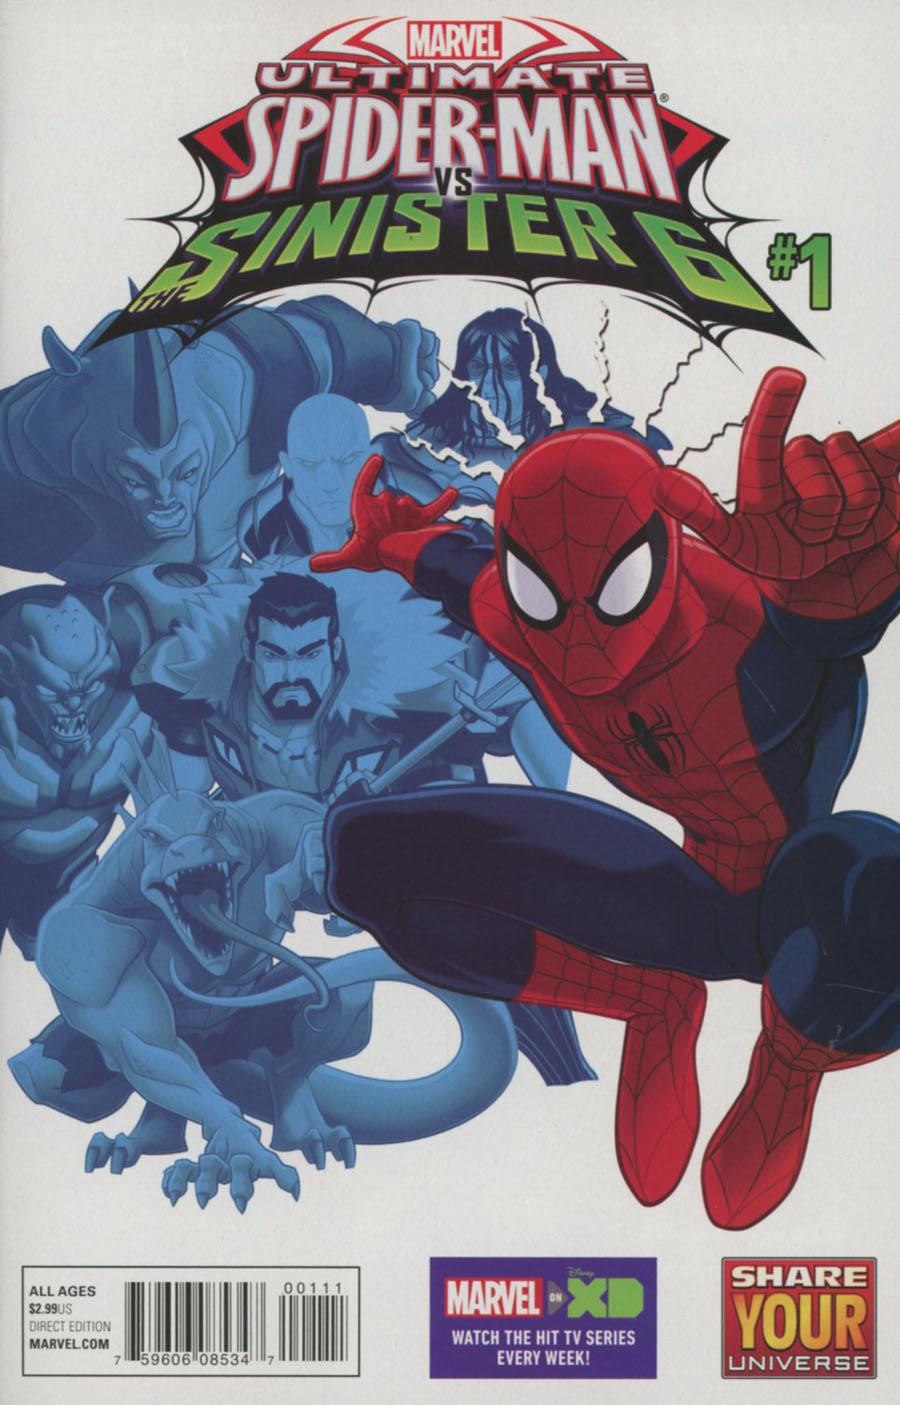 Marvel Universe Ultimate Spider-Man vs Sinister Six Vol. 1 #1